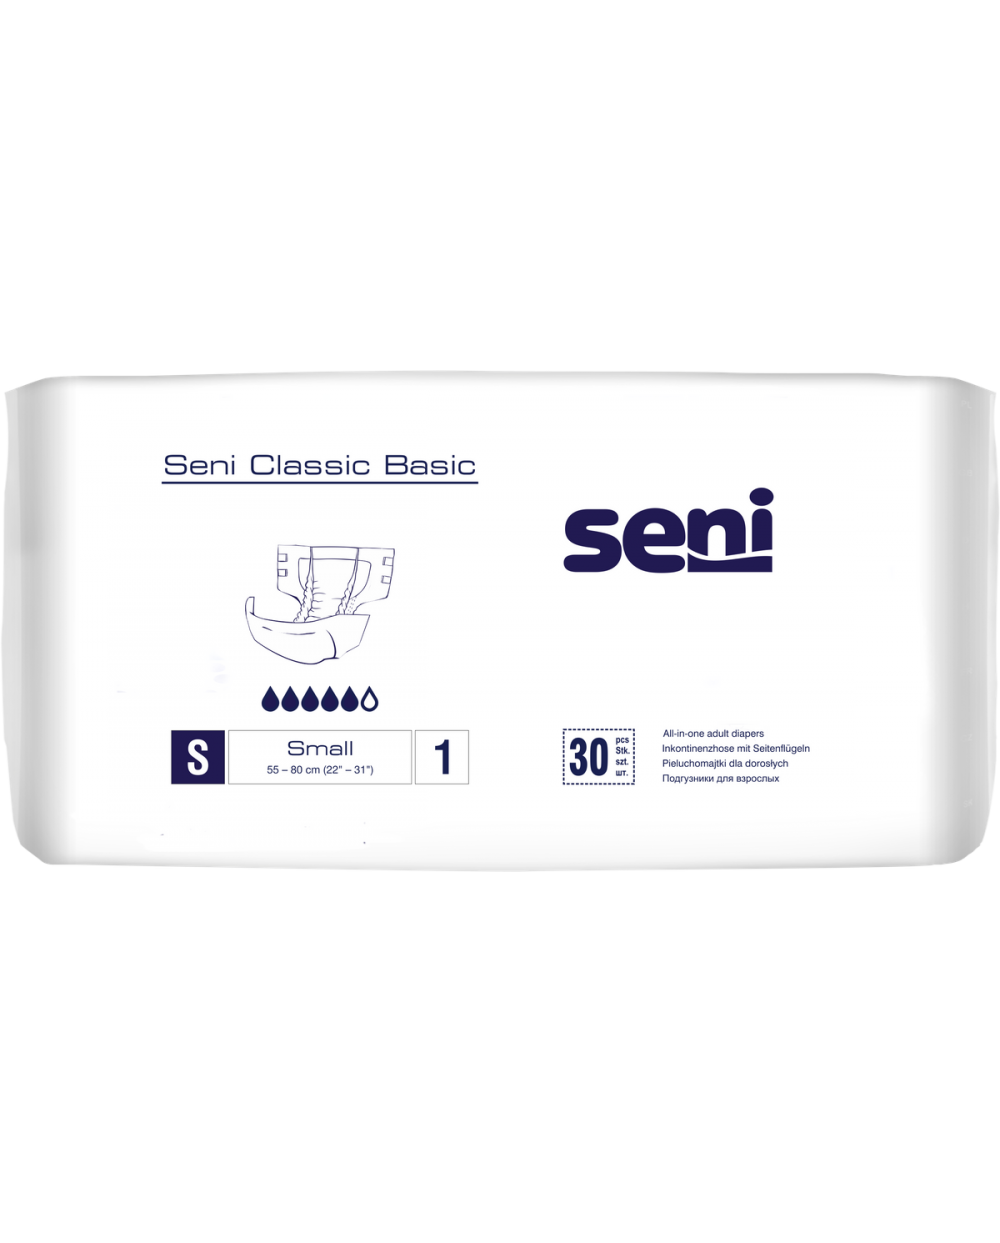 Seni CLASSIC BASIC Atmungsaktive Inkontinenzhosen mit Seitenflügeln - 2